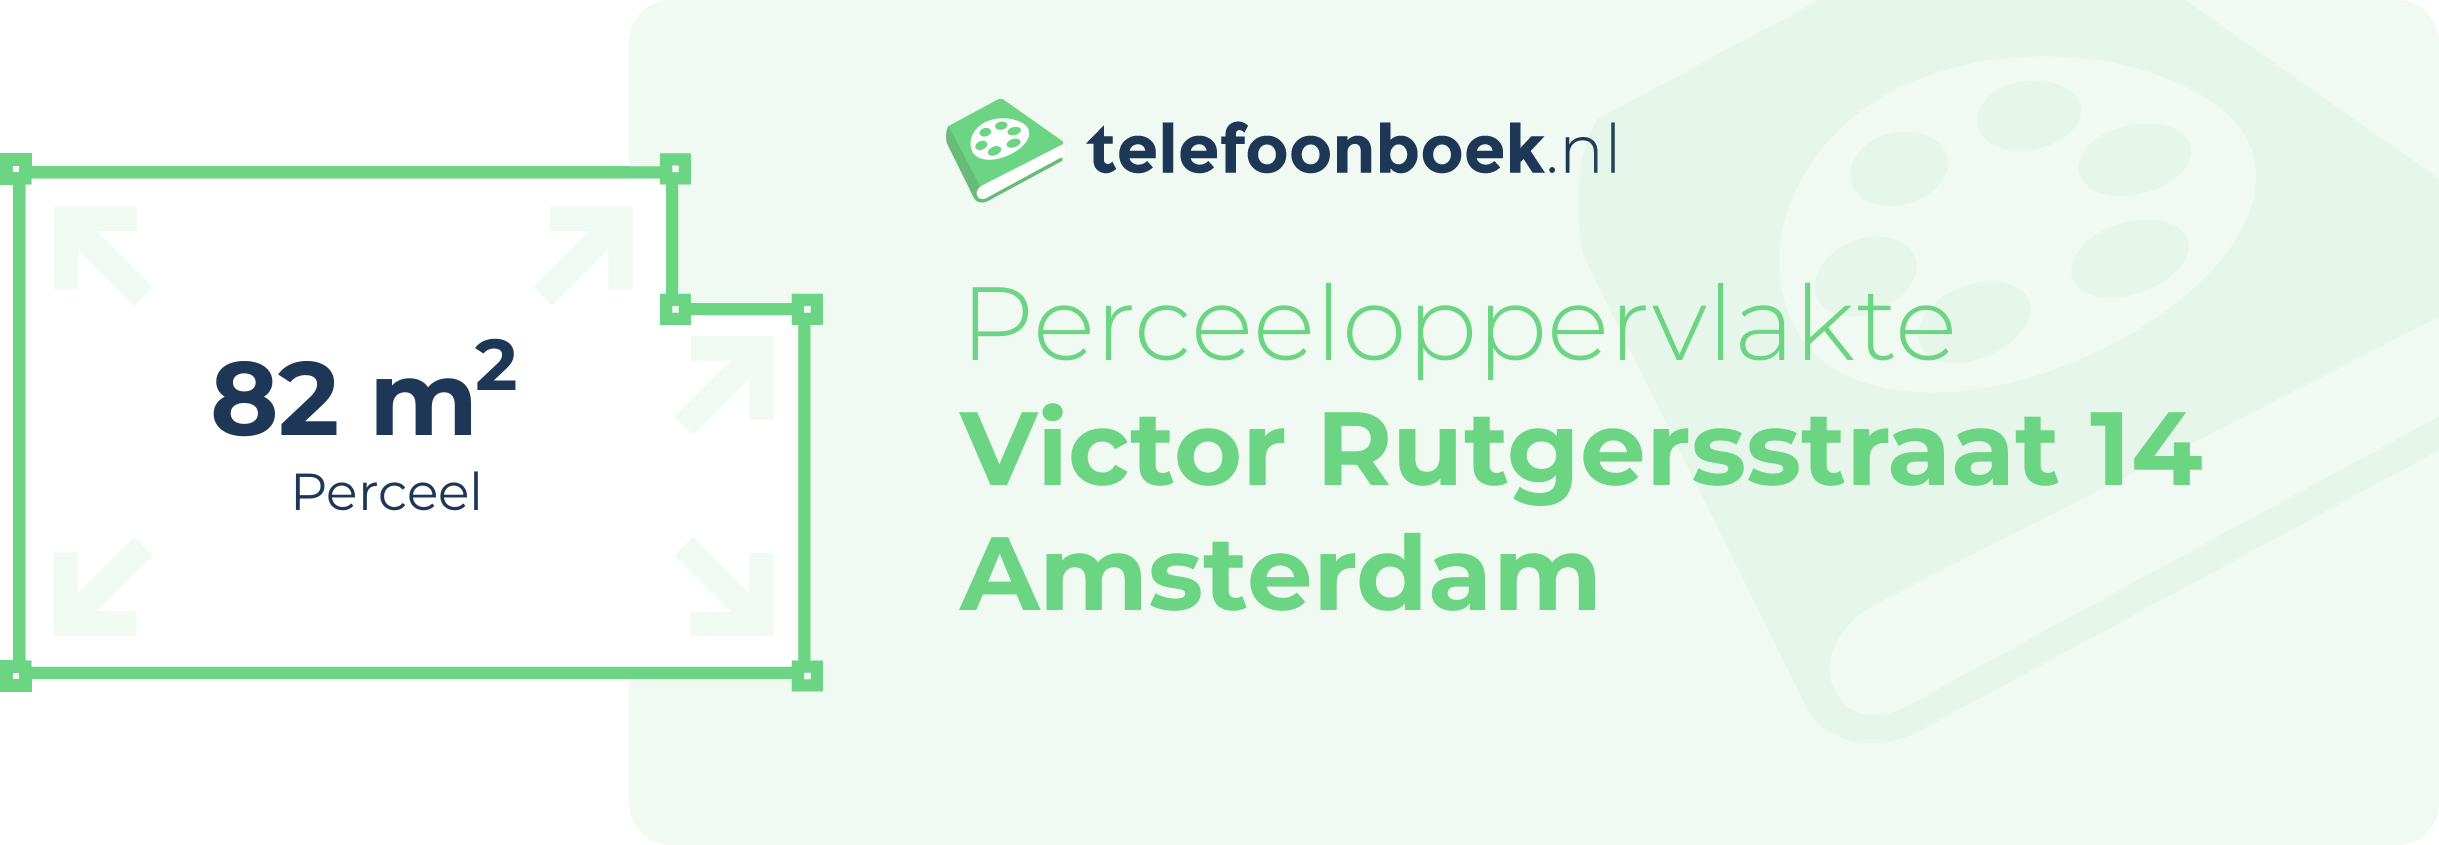 Perceeloppervlakte Victor Rutgersstraat 14 Amsterdam